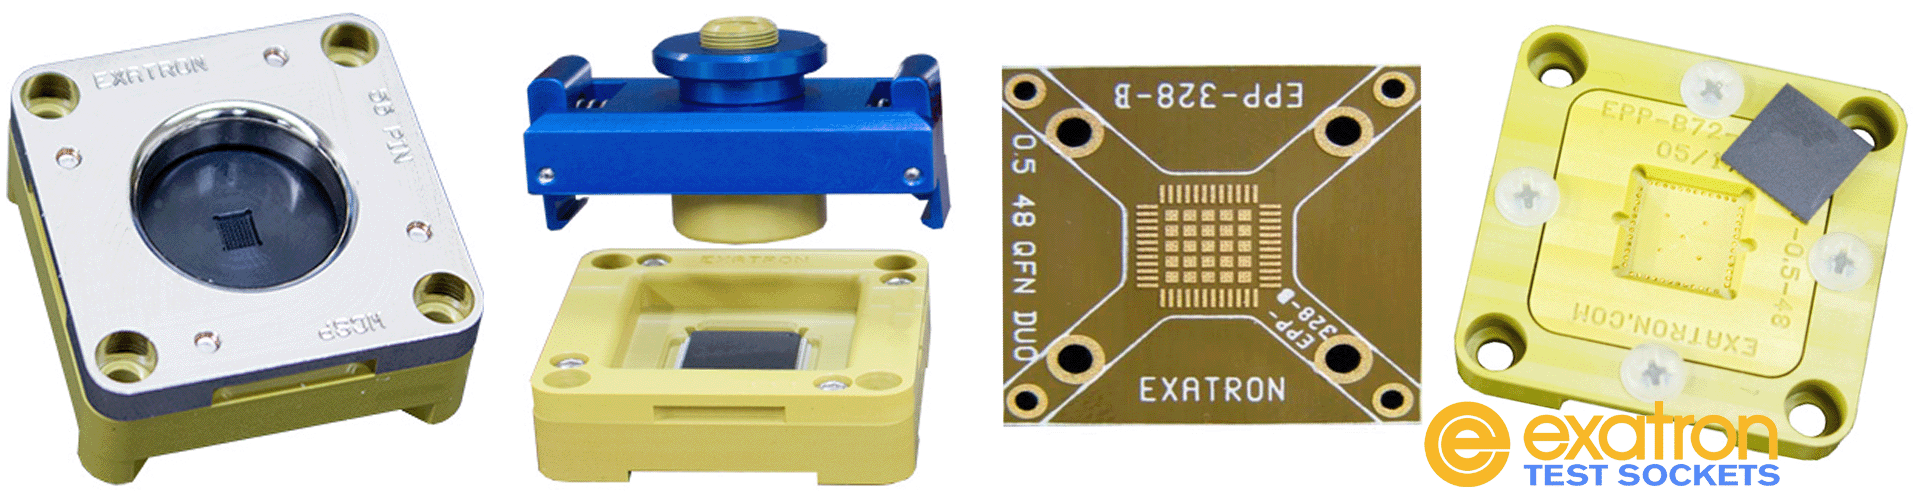 Exatron custom and standard IC device Test Sockets